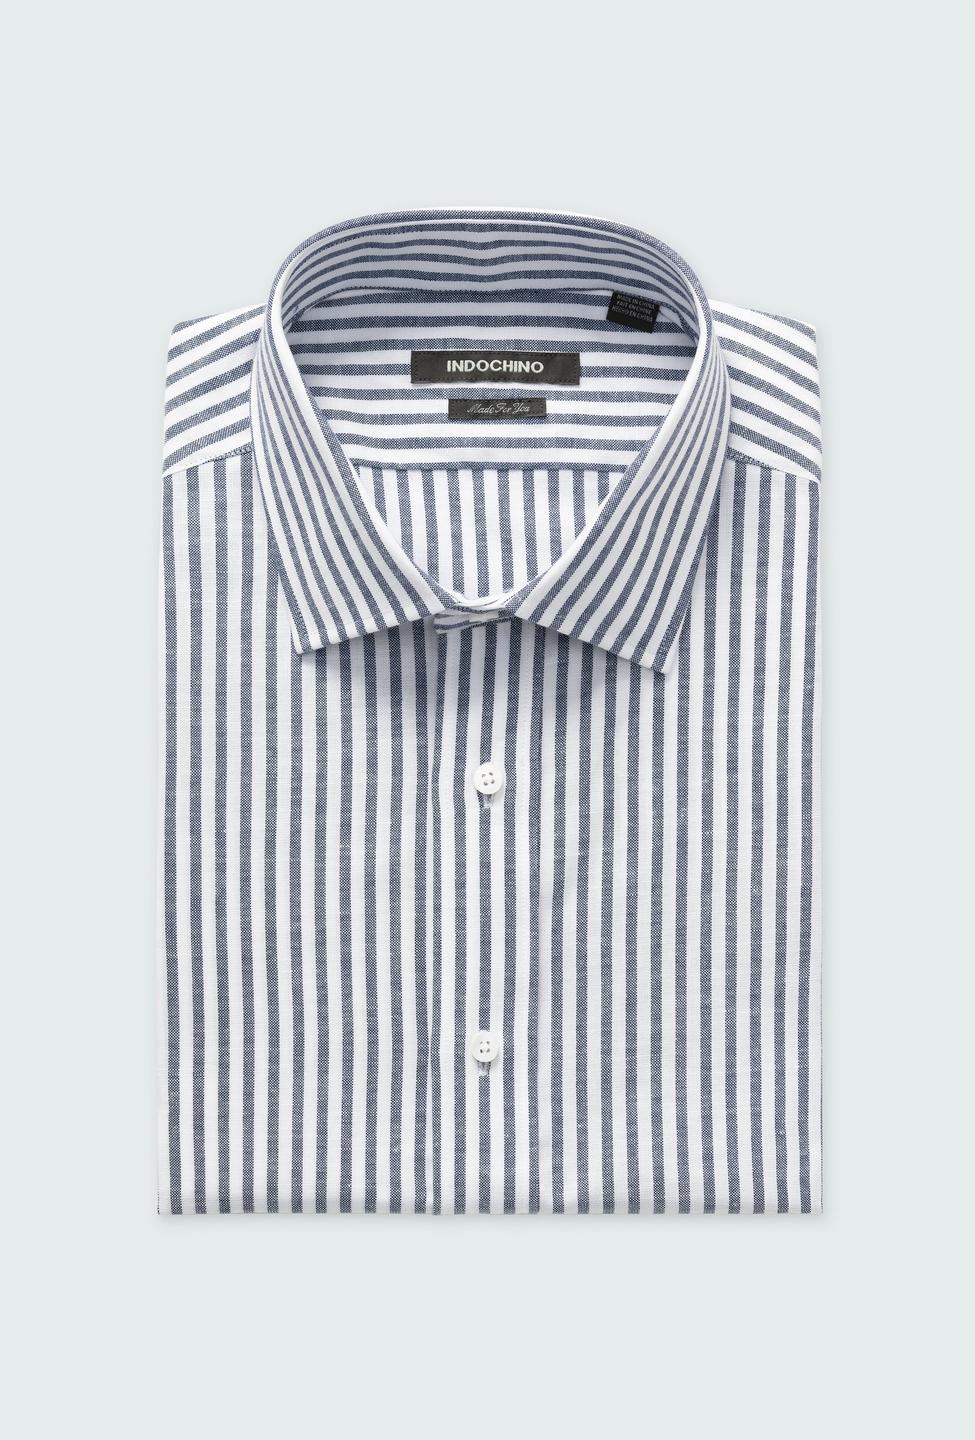 Navy shirt - Sudbury Striped Design from Premium Indochino Collection